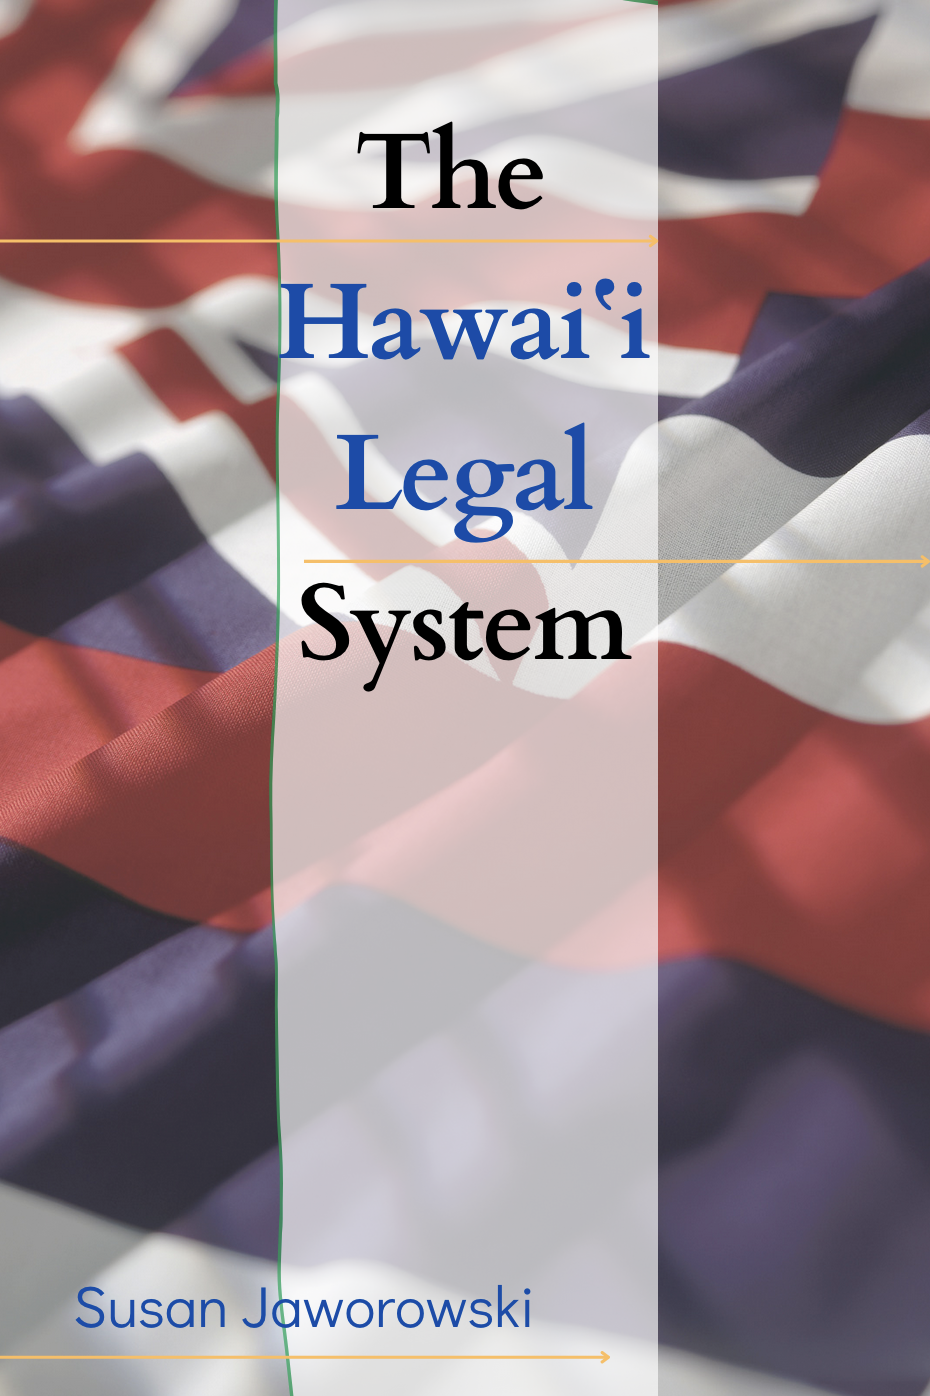 The Hawai'i Legal System